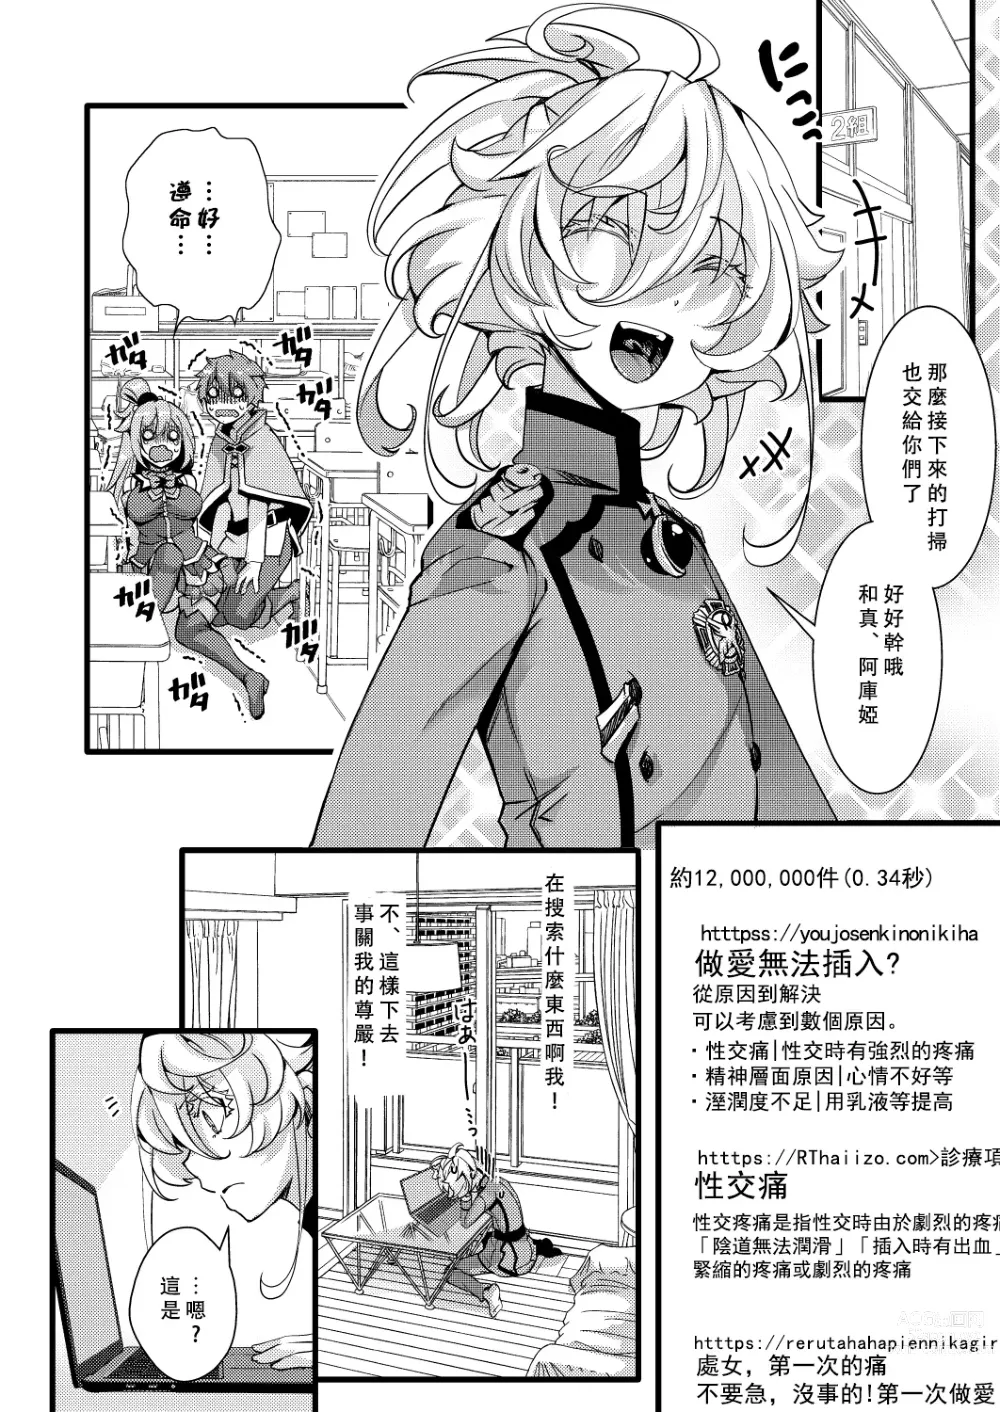 Page 5 of doujinshi Tanya-chan ga Jibun de Kakuchou suru Hanashi